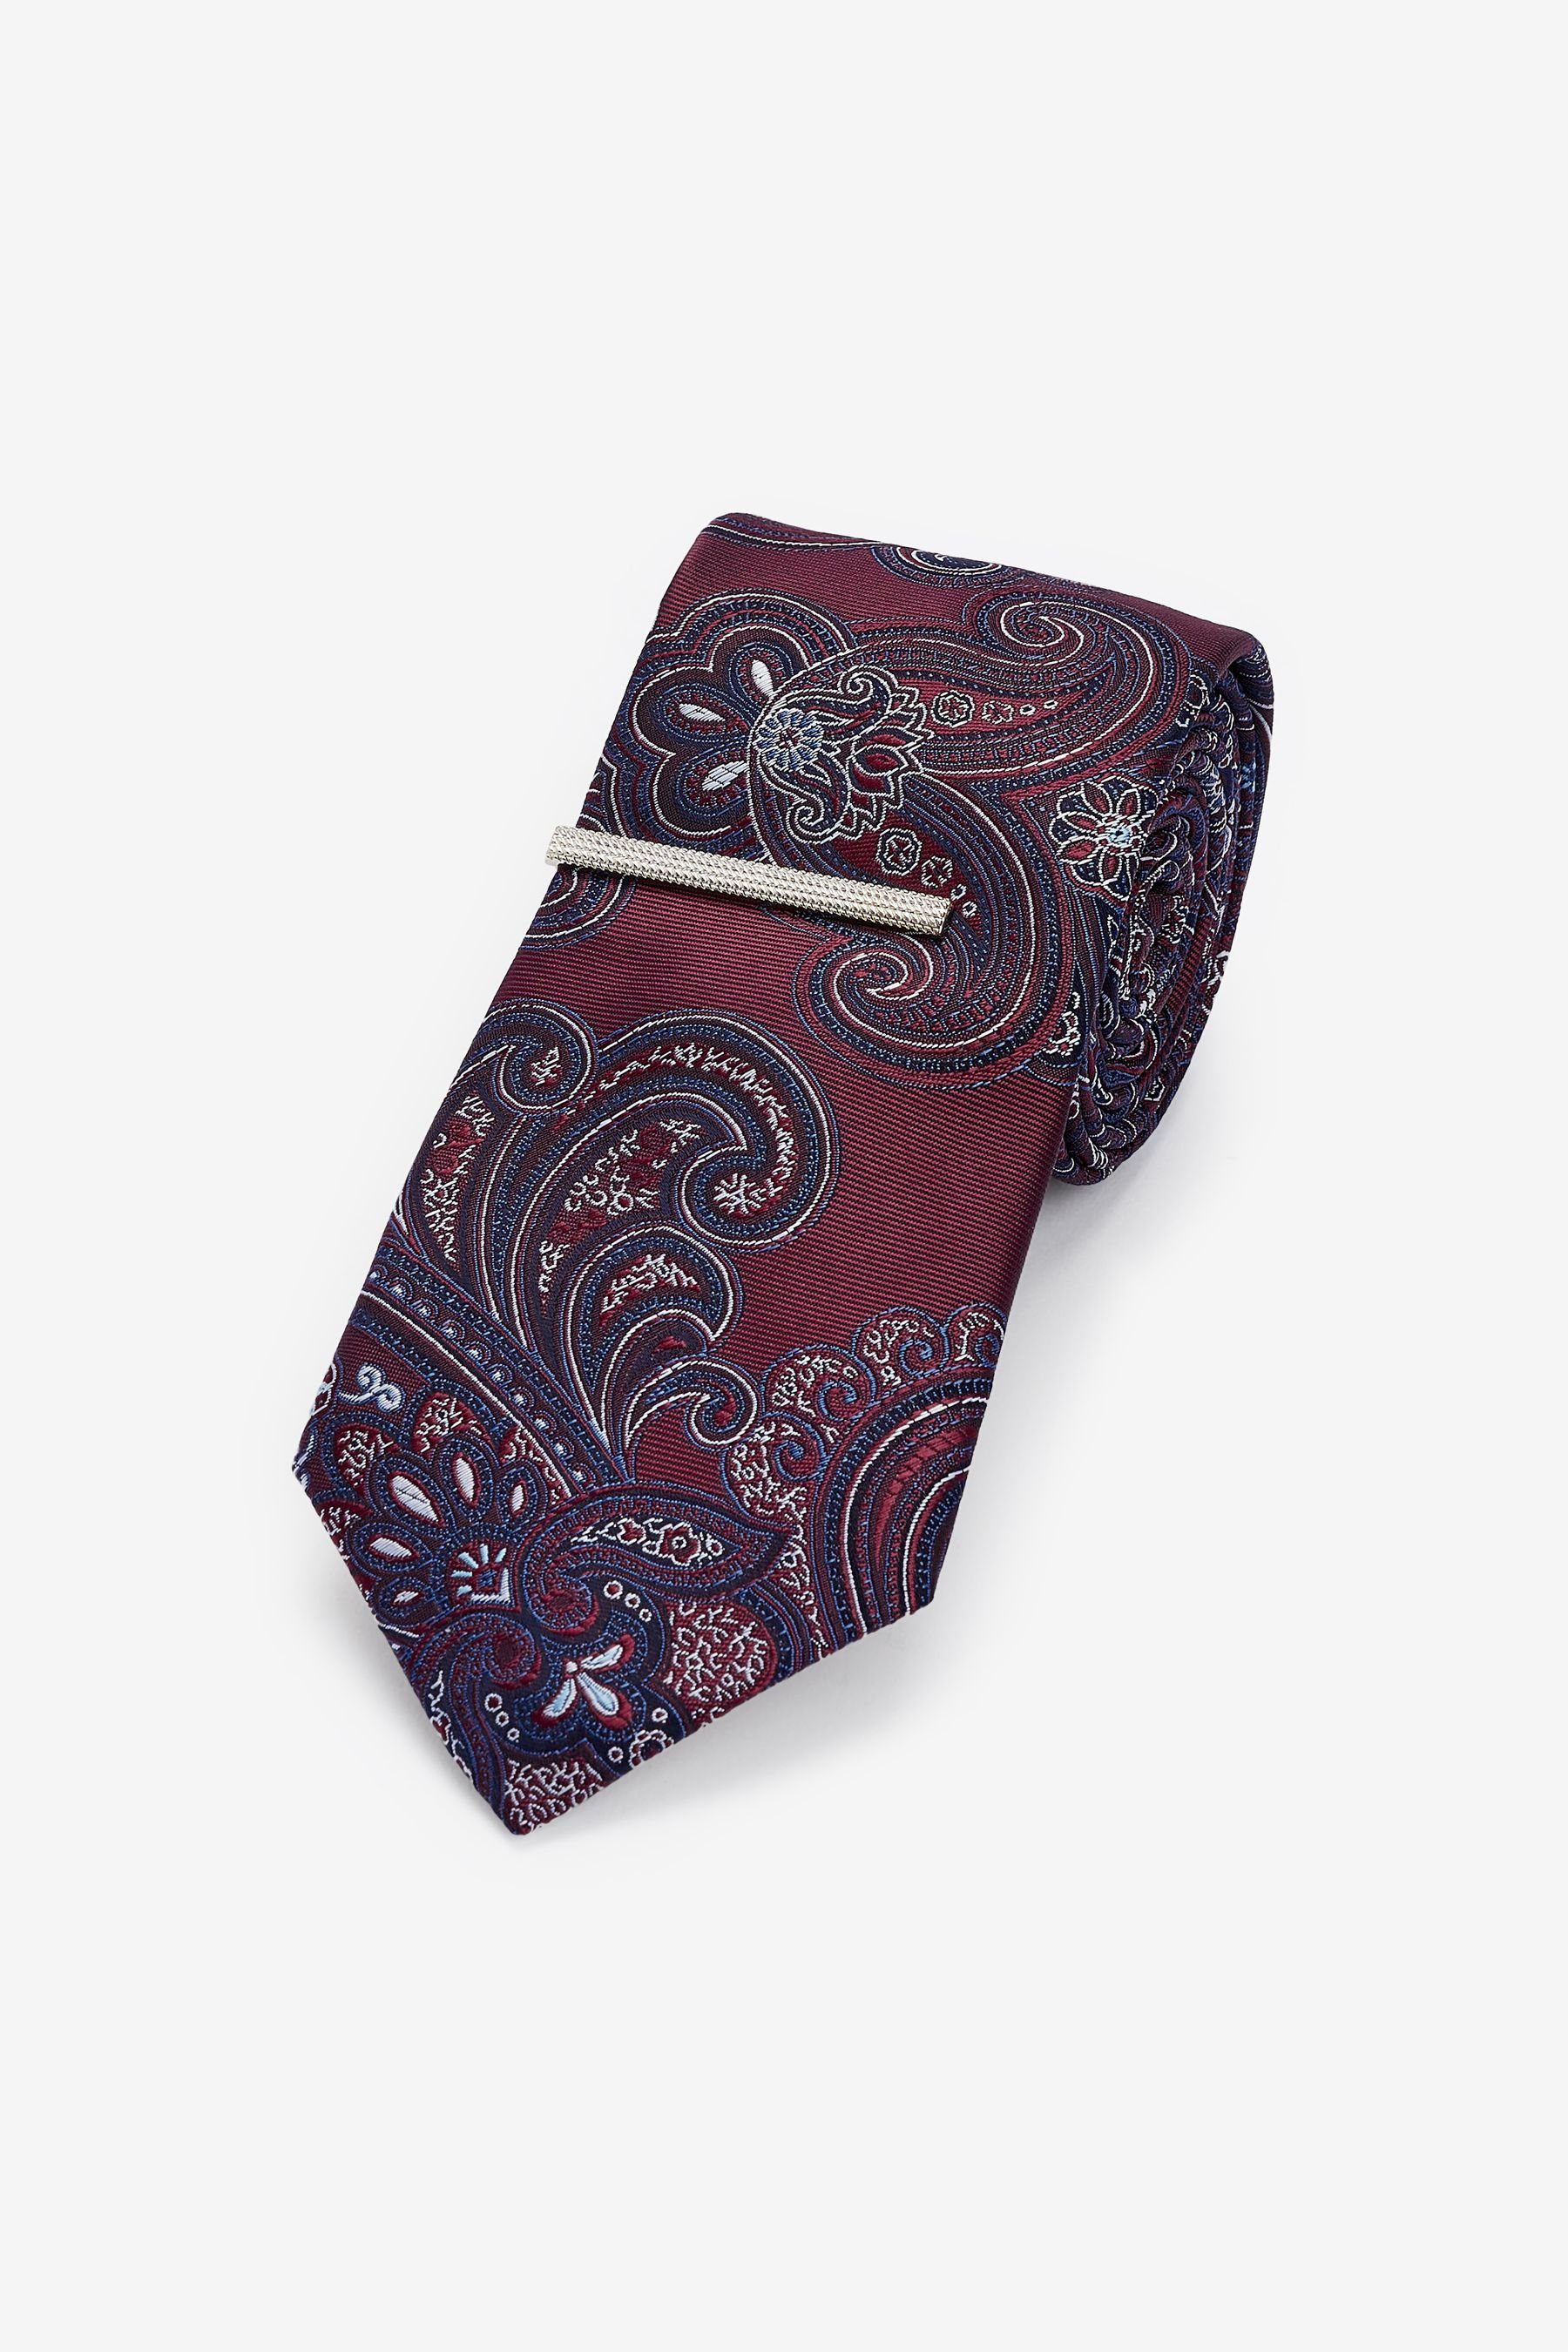 Next Krawatte Gemusterte Krawatte mit Krawattenklammer, Slim (2-St) Burgundy Red Paisley